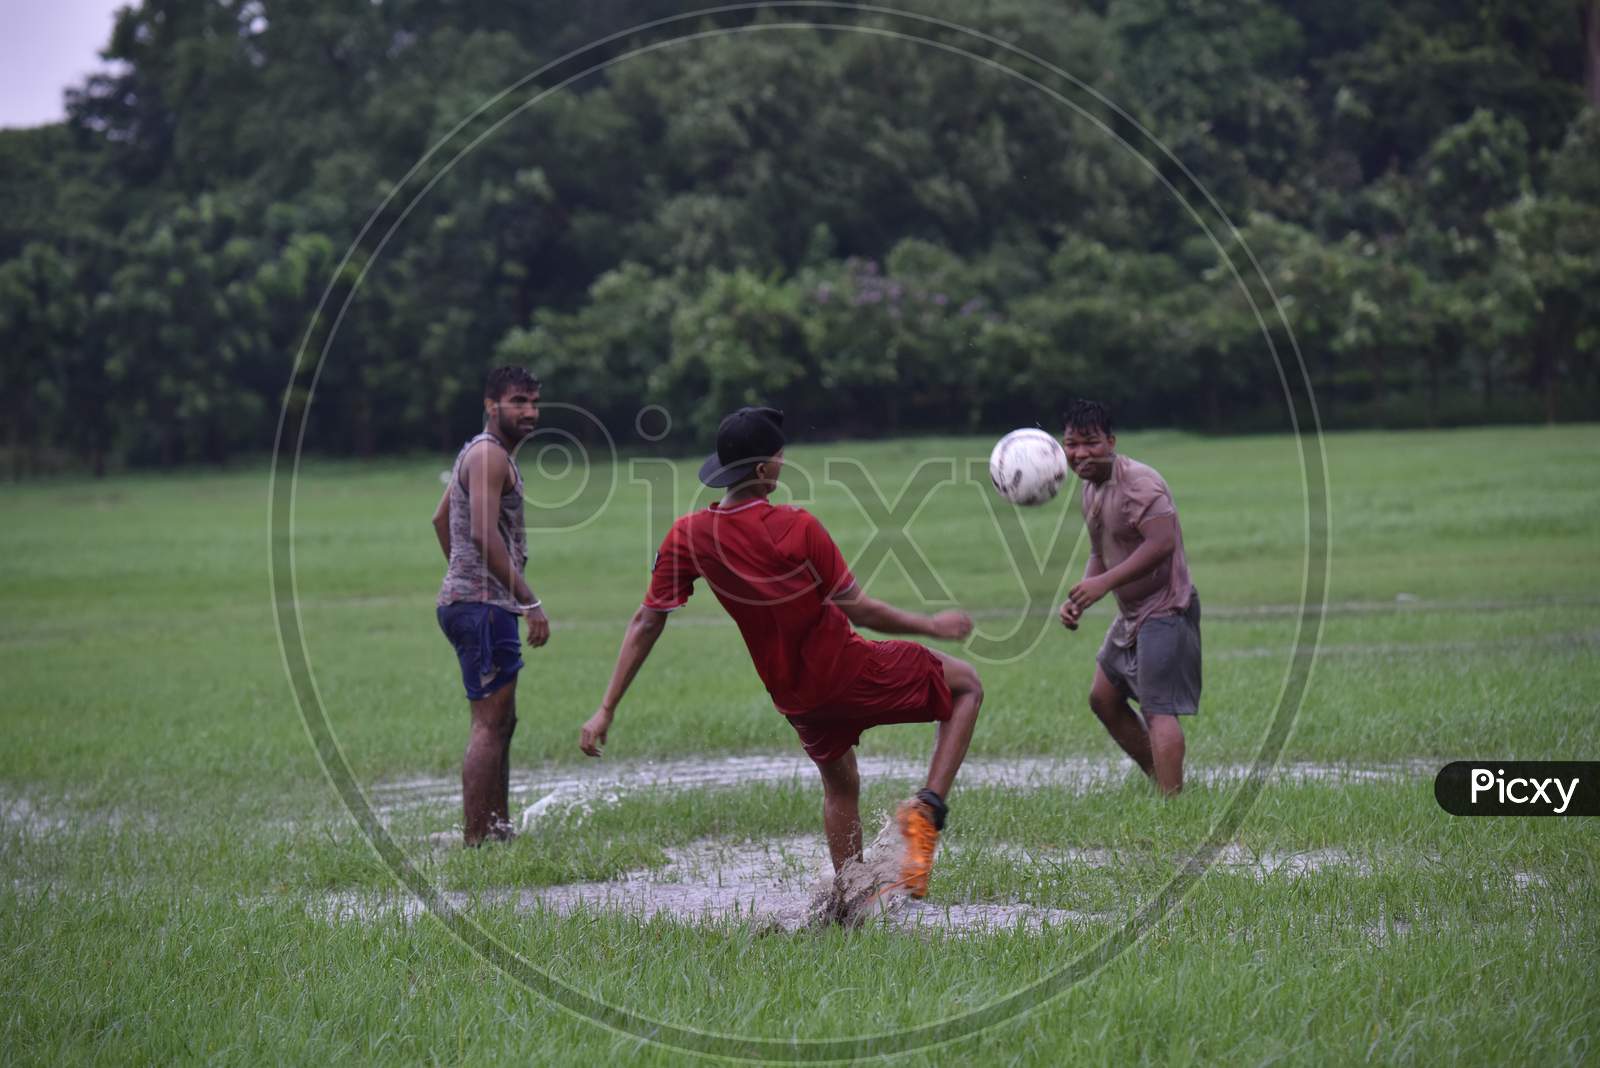 Indian boy attempting a football kick during rain